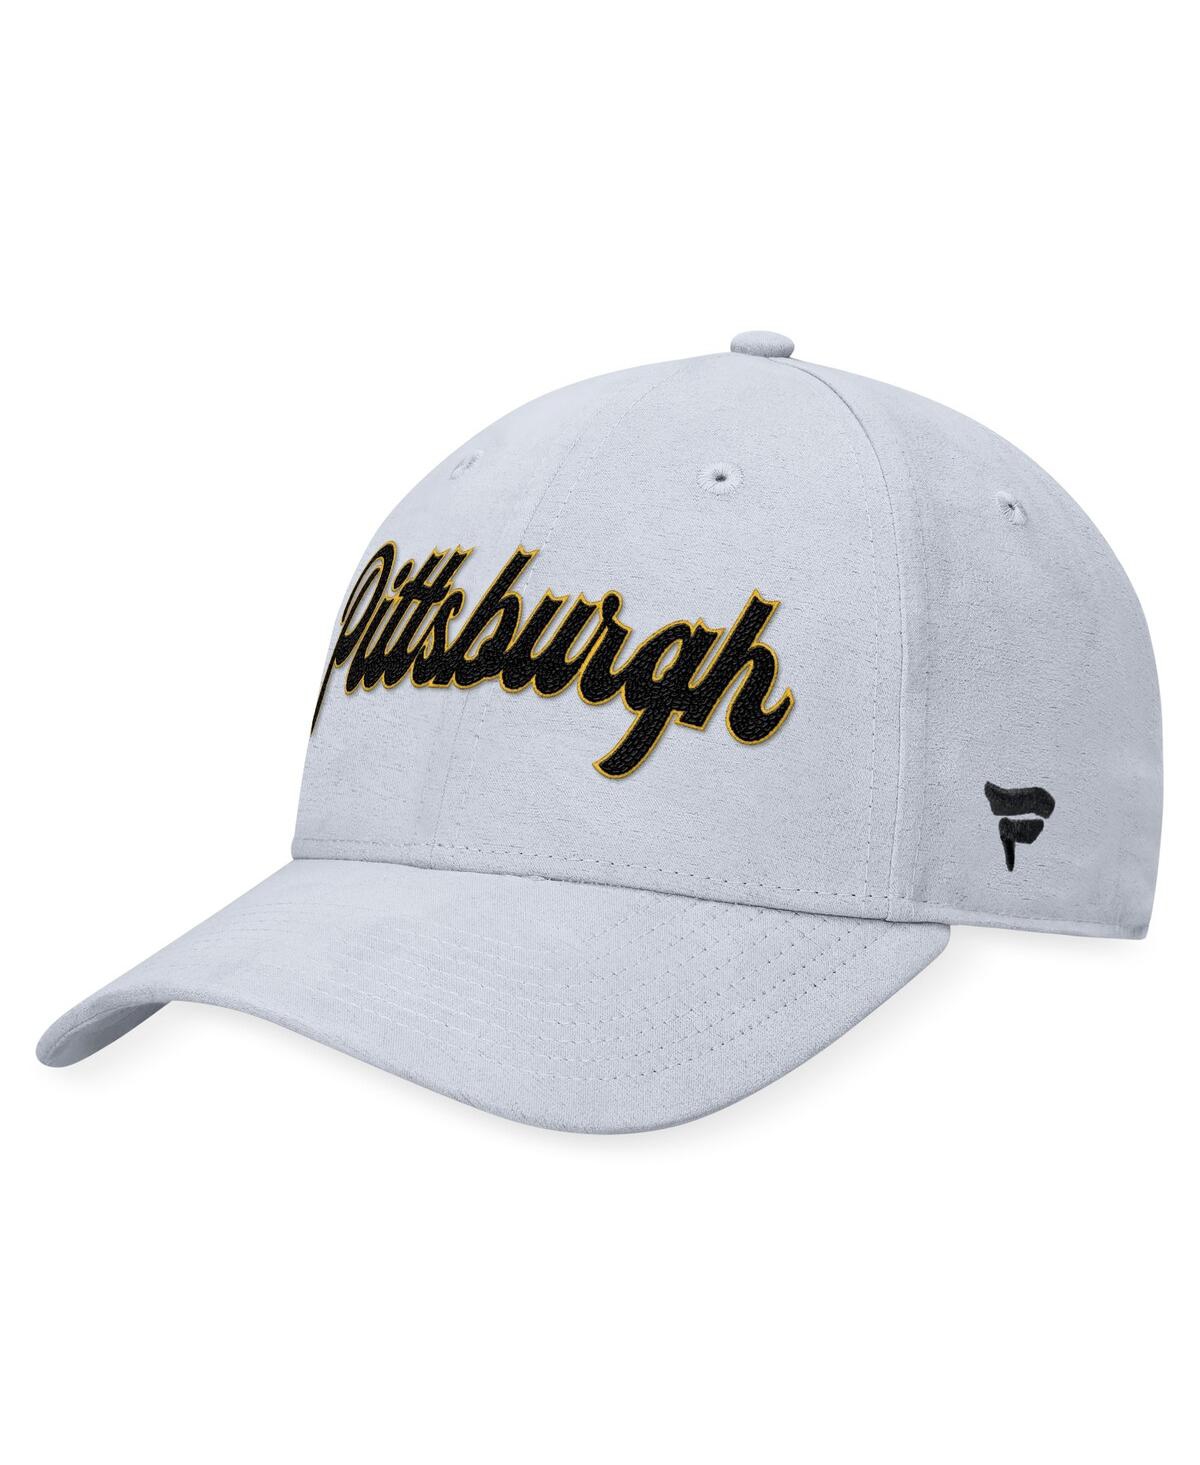 Shop Fanatics Men's  Gray Distressed Pittsburgh Penguins Heritage Vintage-like Suede Adjustable Hat